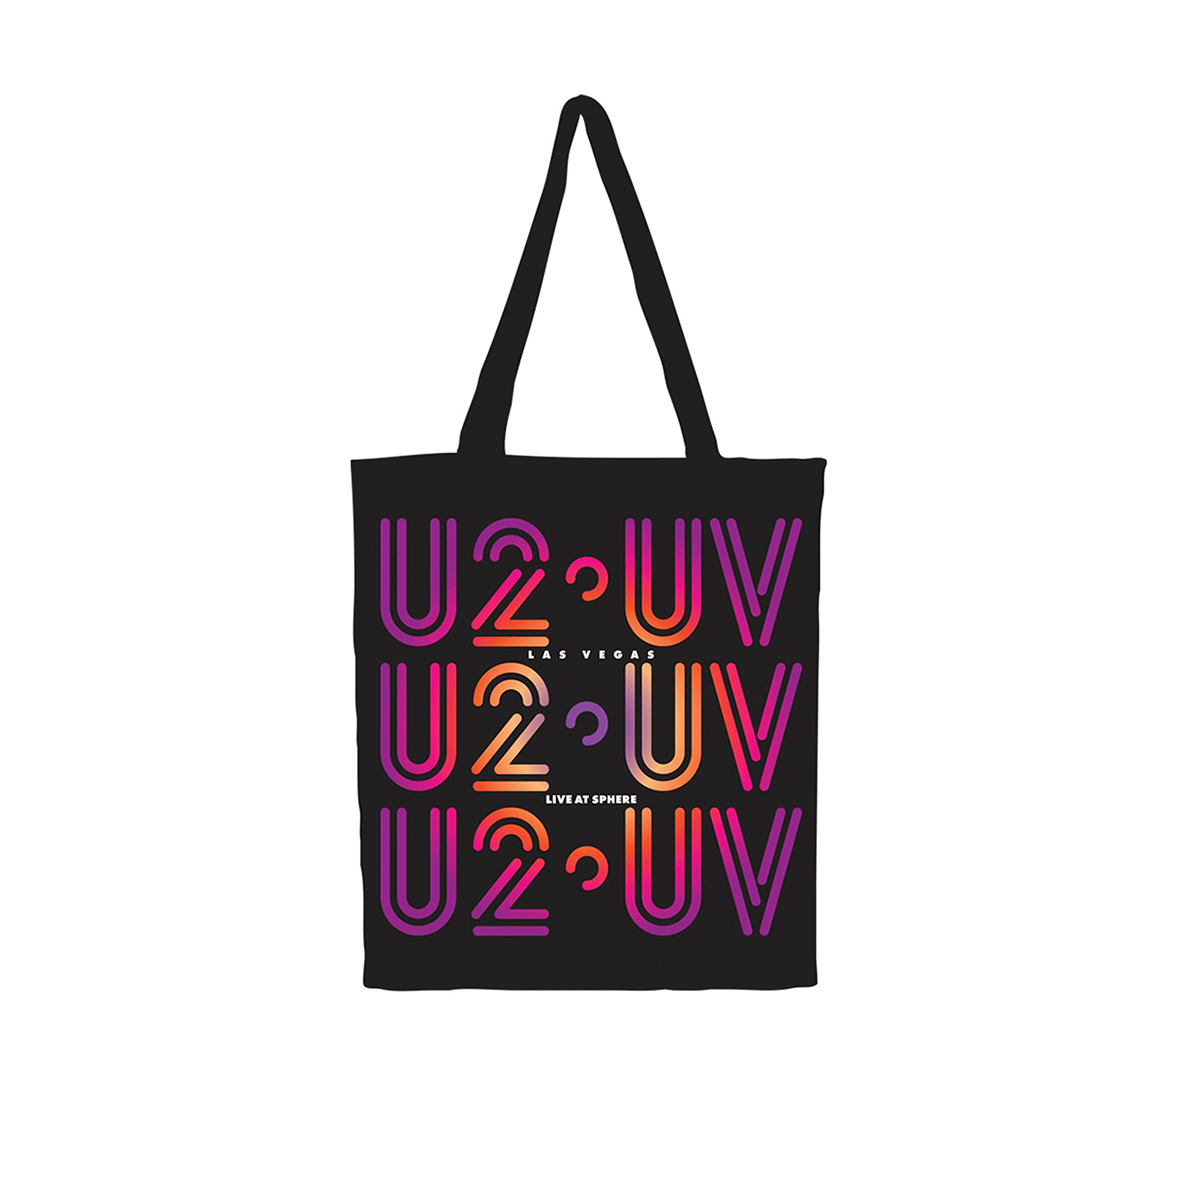 U2 UV Logo Live At Sphere Tote